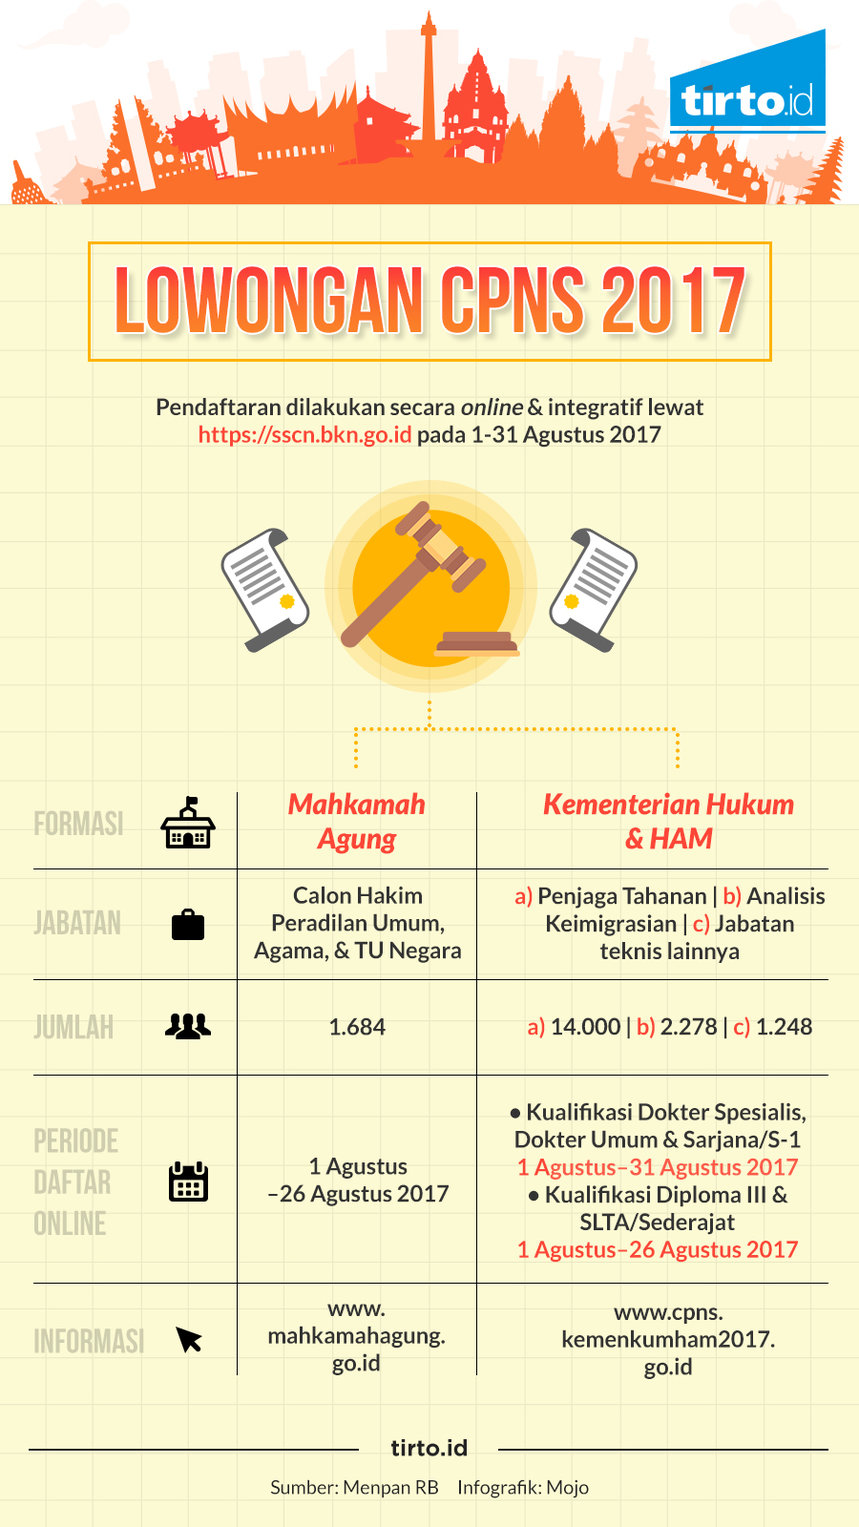 Infografik Tunggal Lowongan CPNS 2017